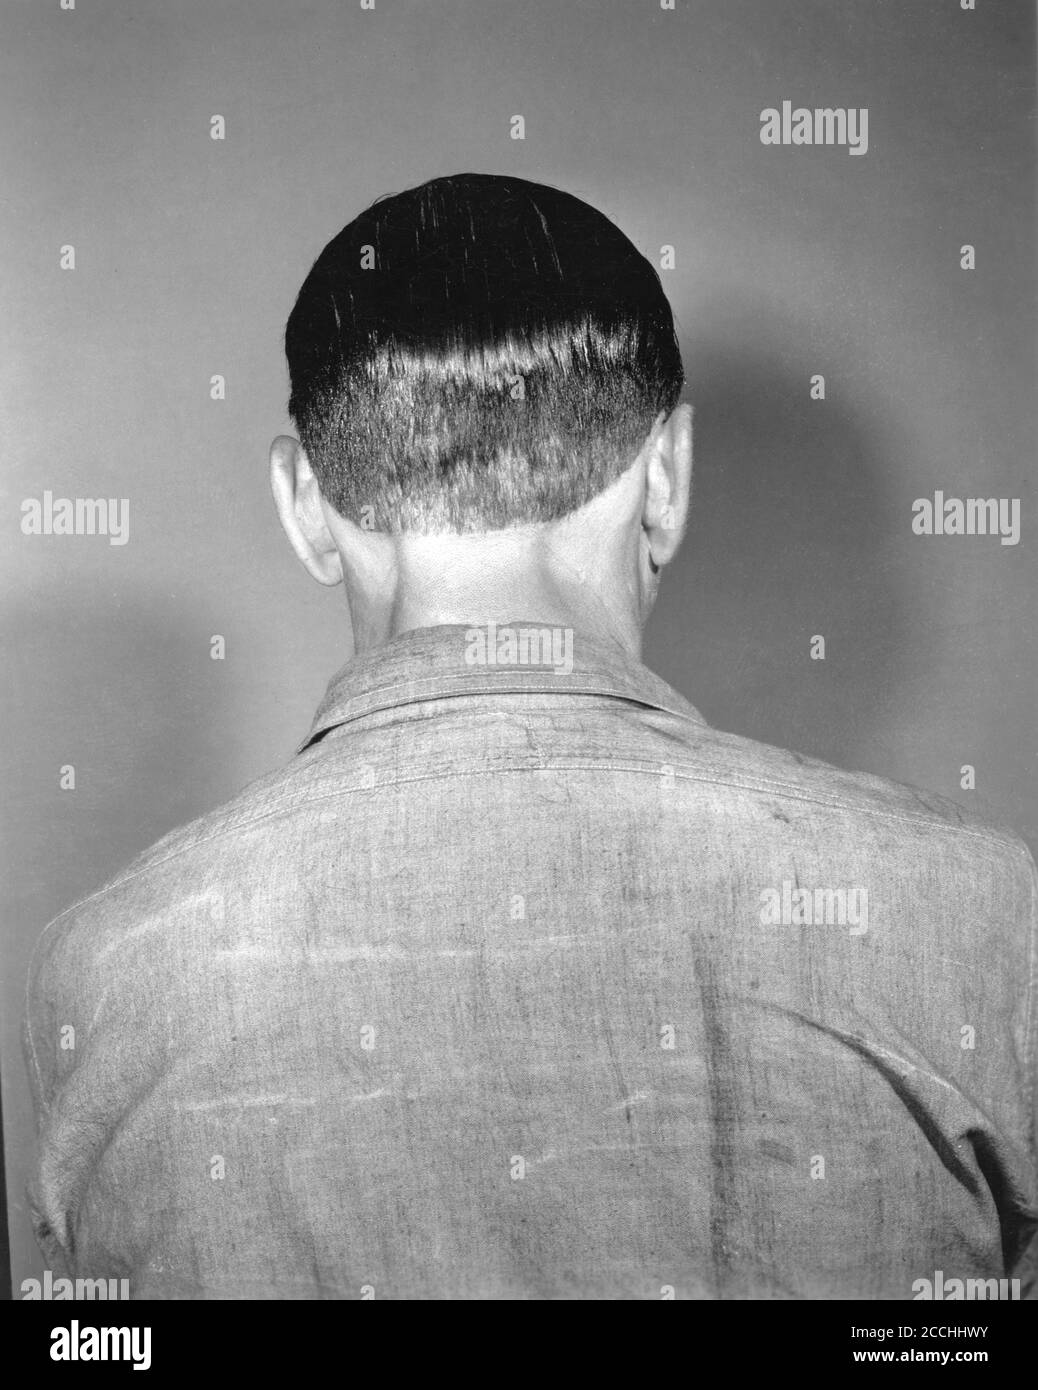 humphrey-bogart-as-fred-c-dobbs-make-up-test-photo-of-haircut-for-early-tampico-scenes-in-the-treasure-of-the-sierra-madre-1948-director-screenplay-john-huston-novel-b-traven-warner-bros-2CCHHWY.jpg